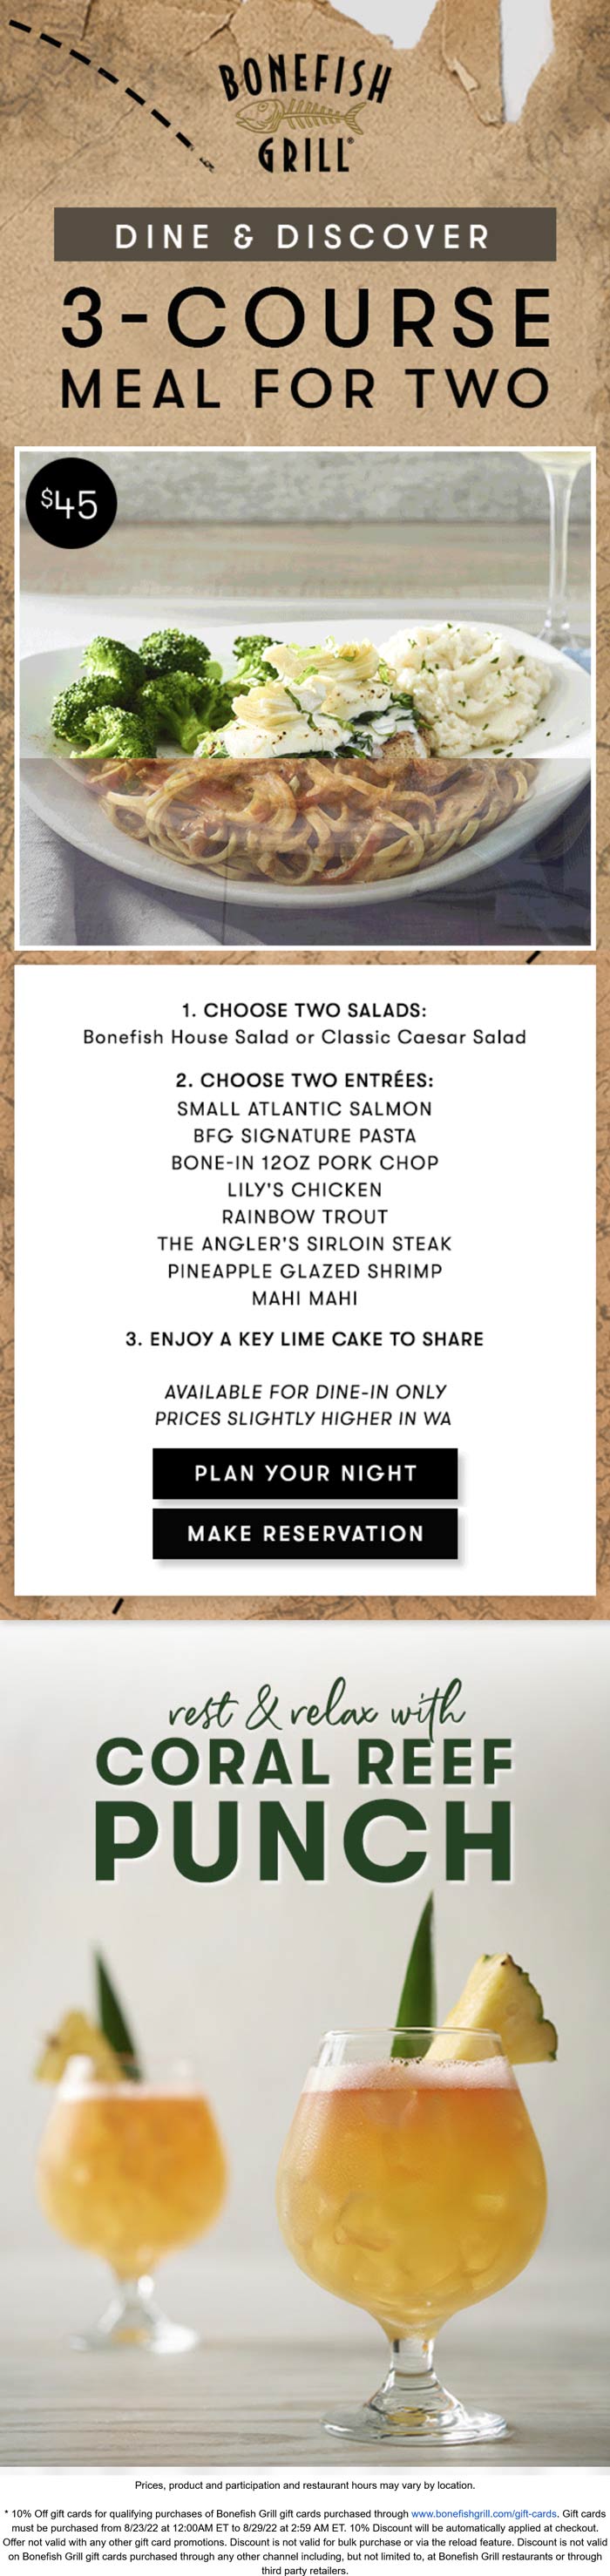 Bonefish Grill restaurants Coupon  3-course dinner for 2 = $45 at Bonefish Grill #bonefishgrill 